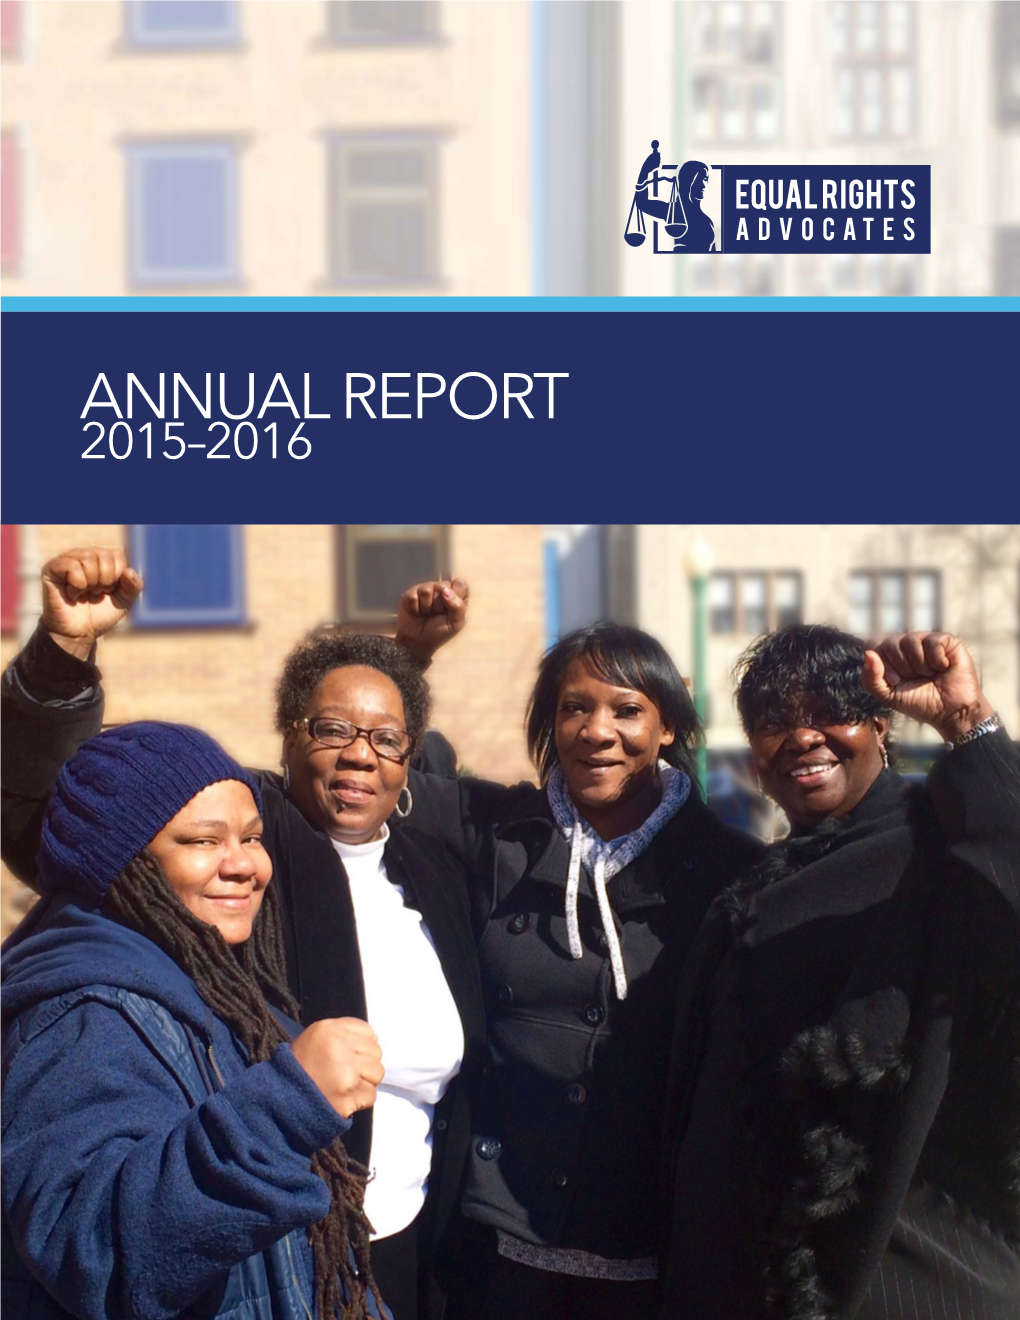 Annual Report: 2015-2016